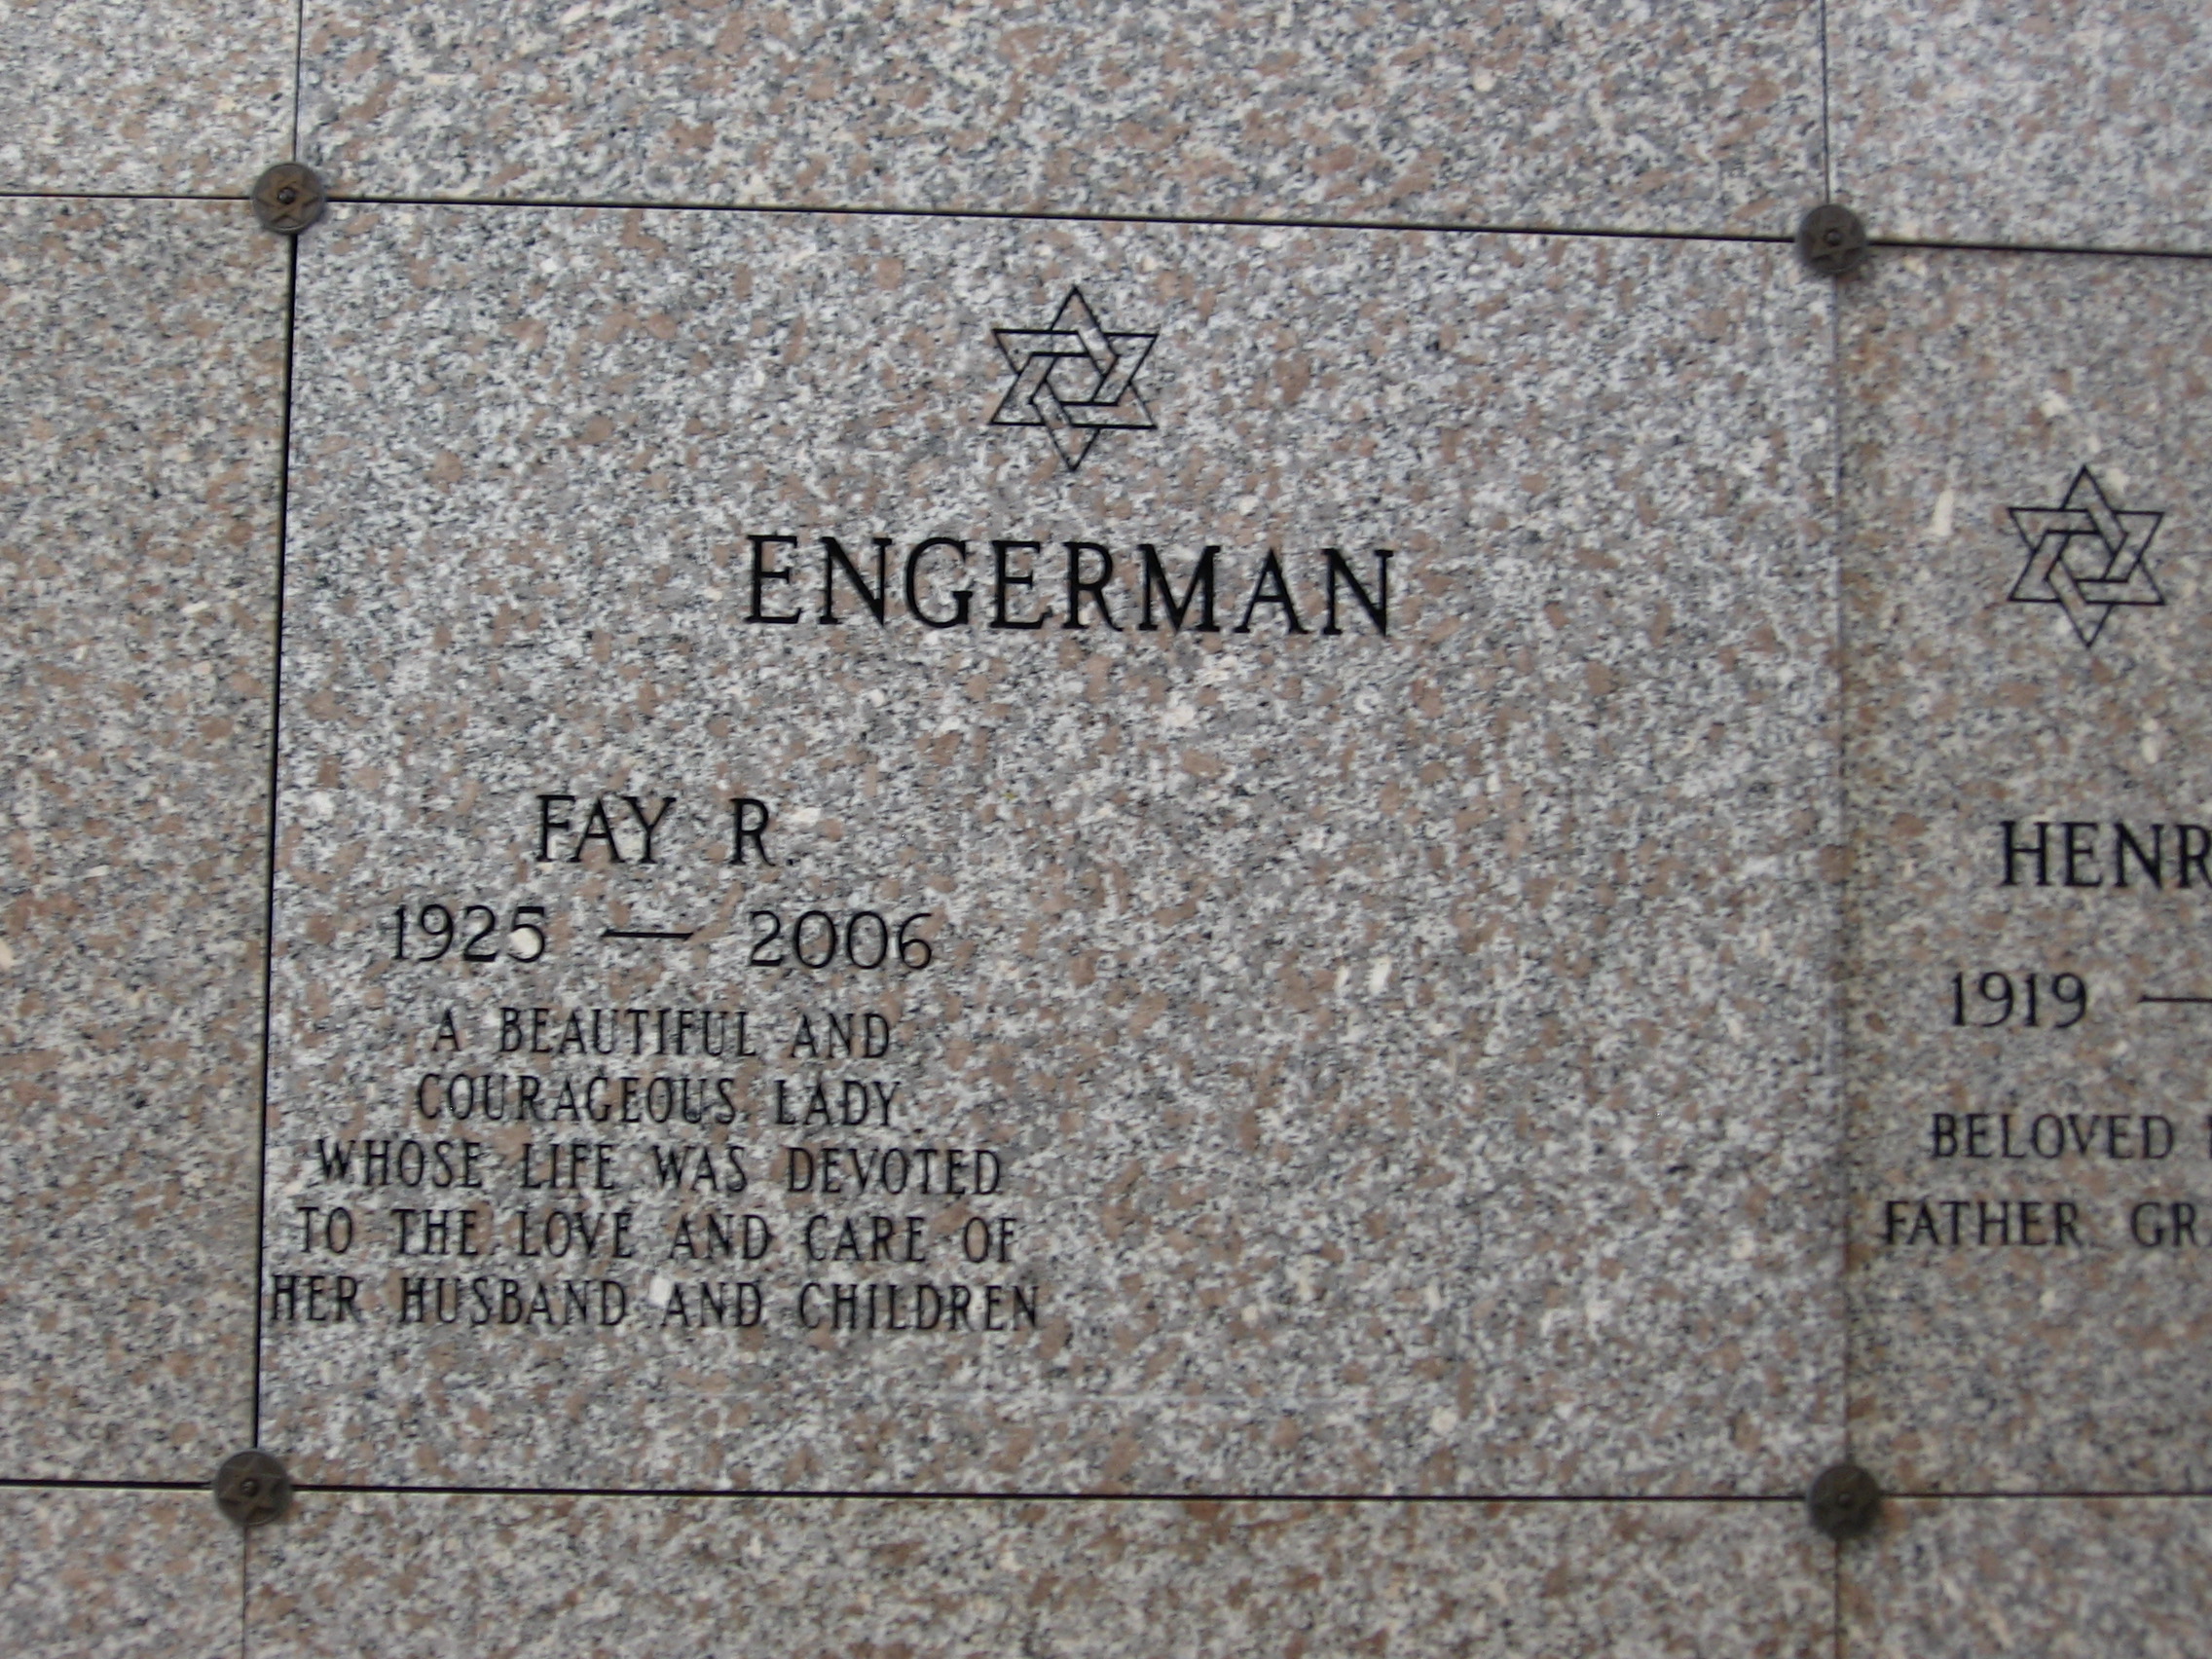 Fay R Engerman